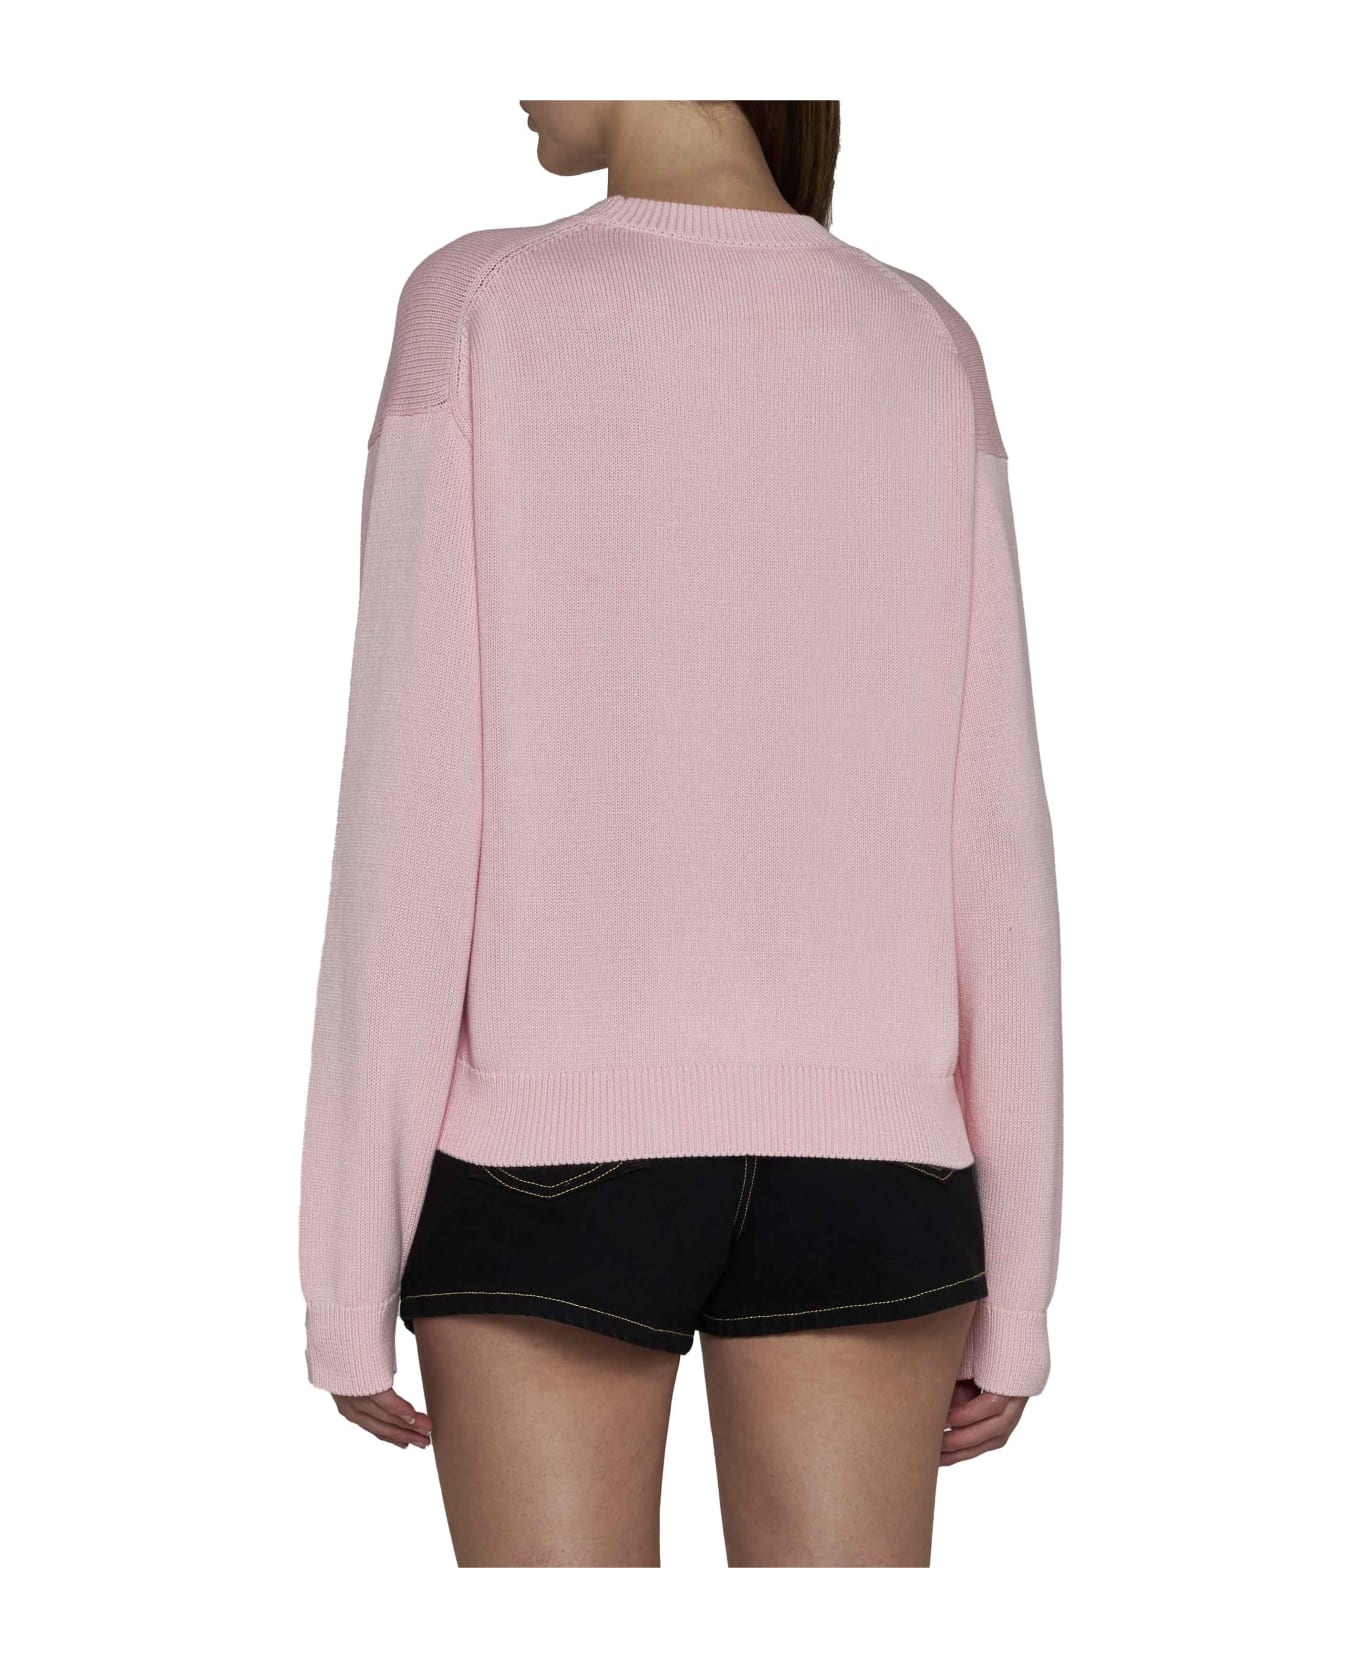 Kenzo Sweater - Faded pink